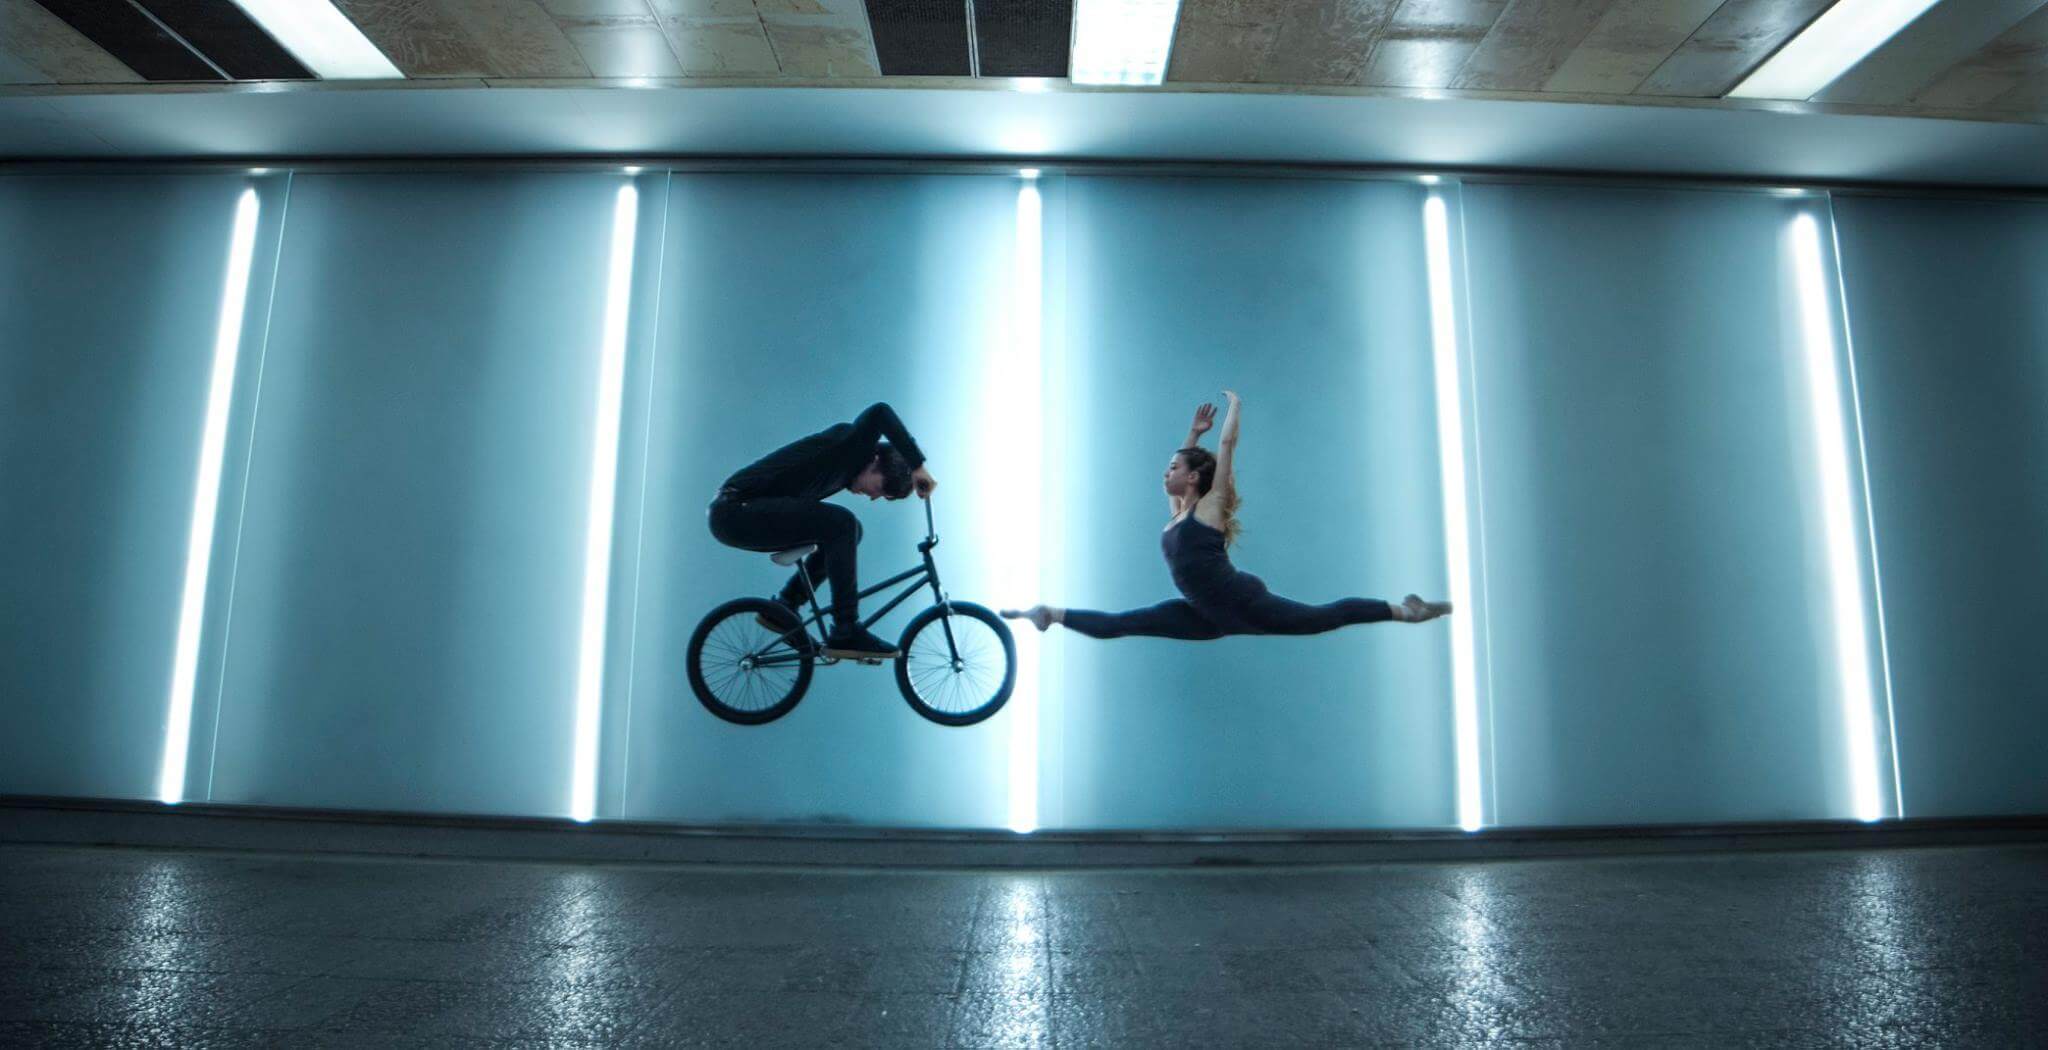 Bike influencer for photoshoots